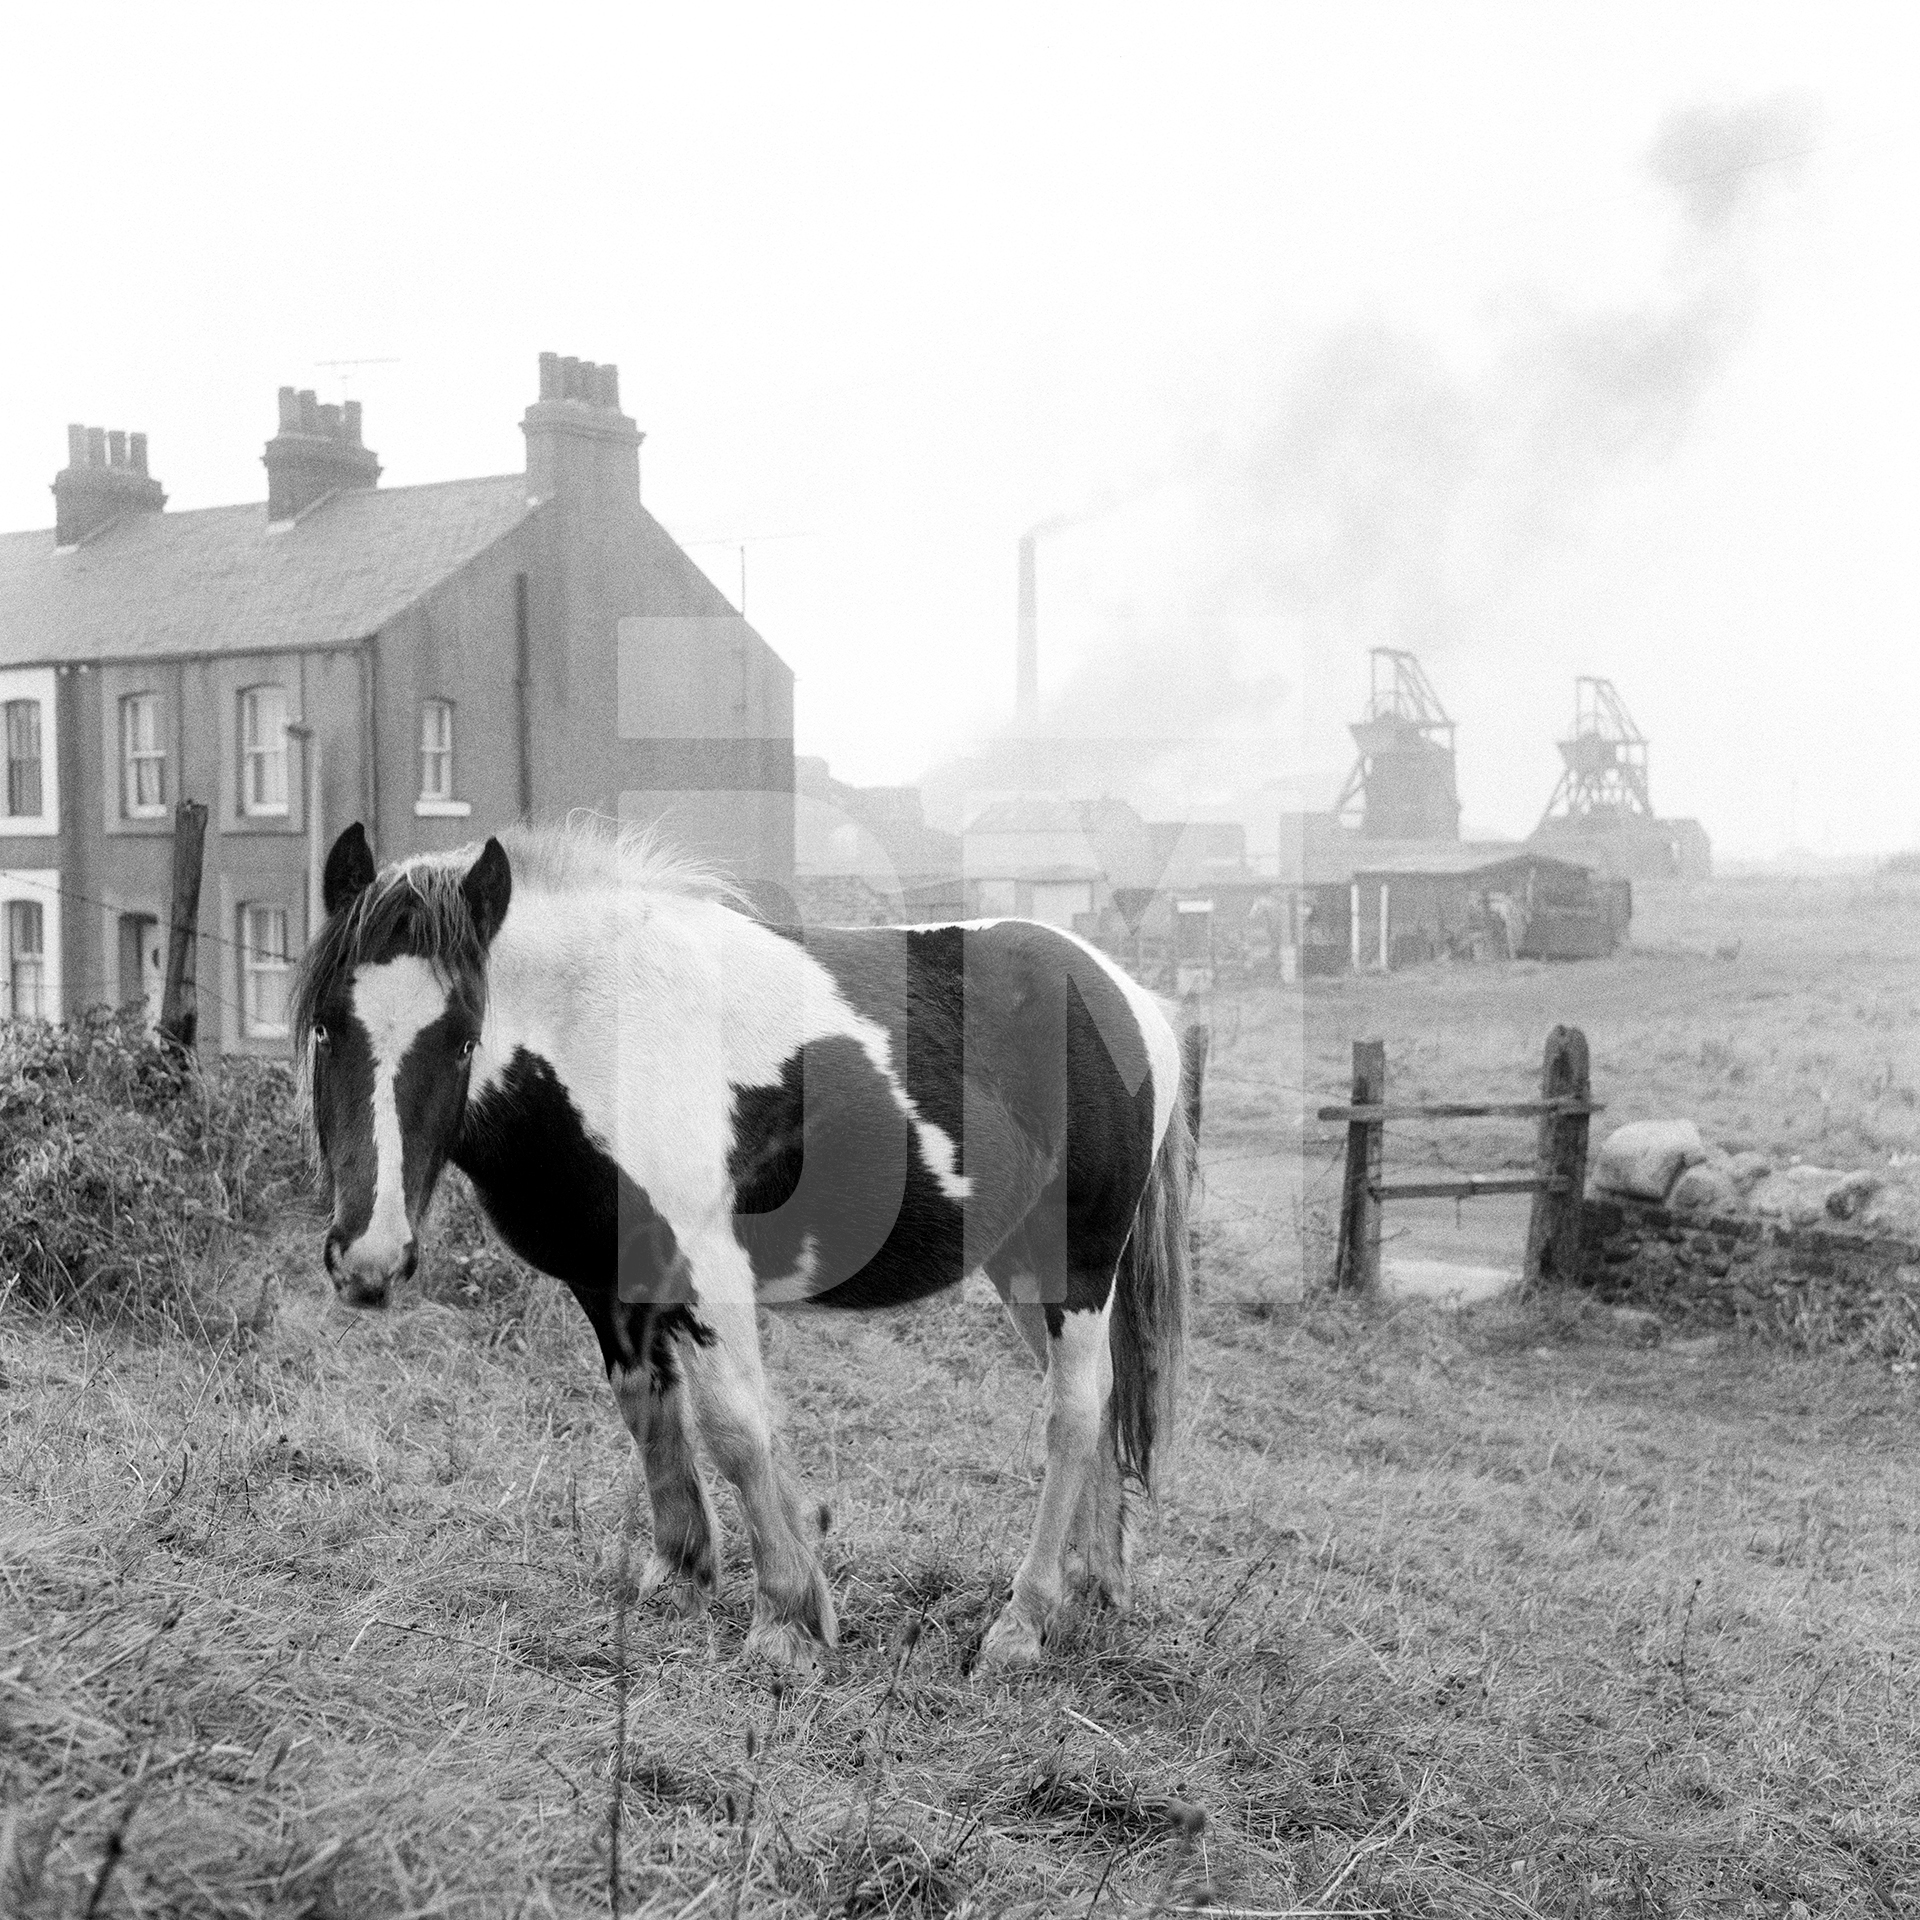 Horse and coal mine, Workington, Cumbria. October 1974 by Daniel Meadows